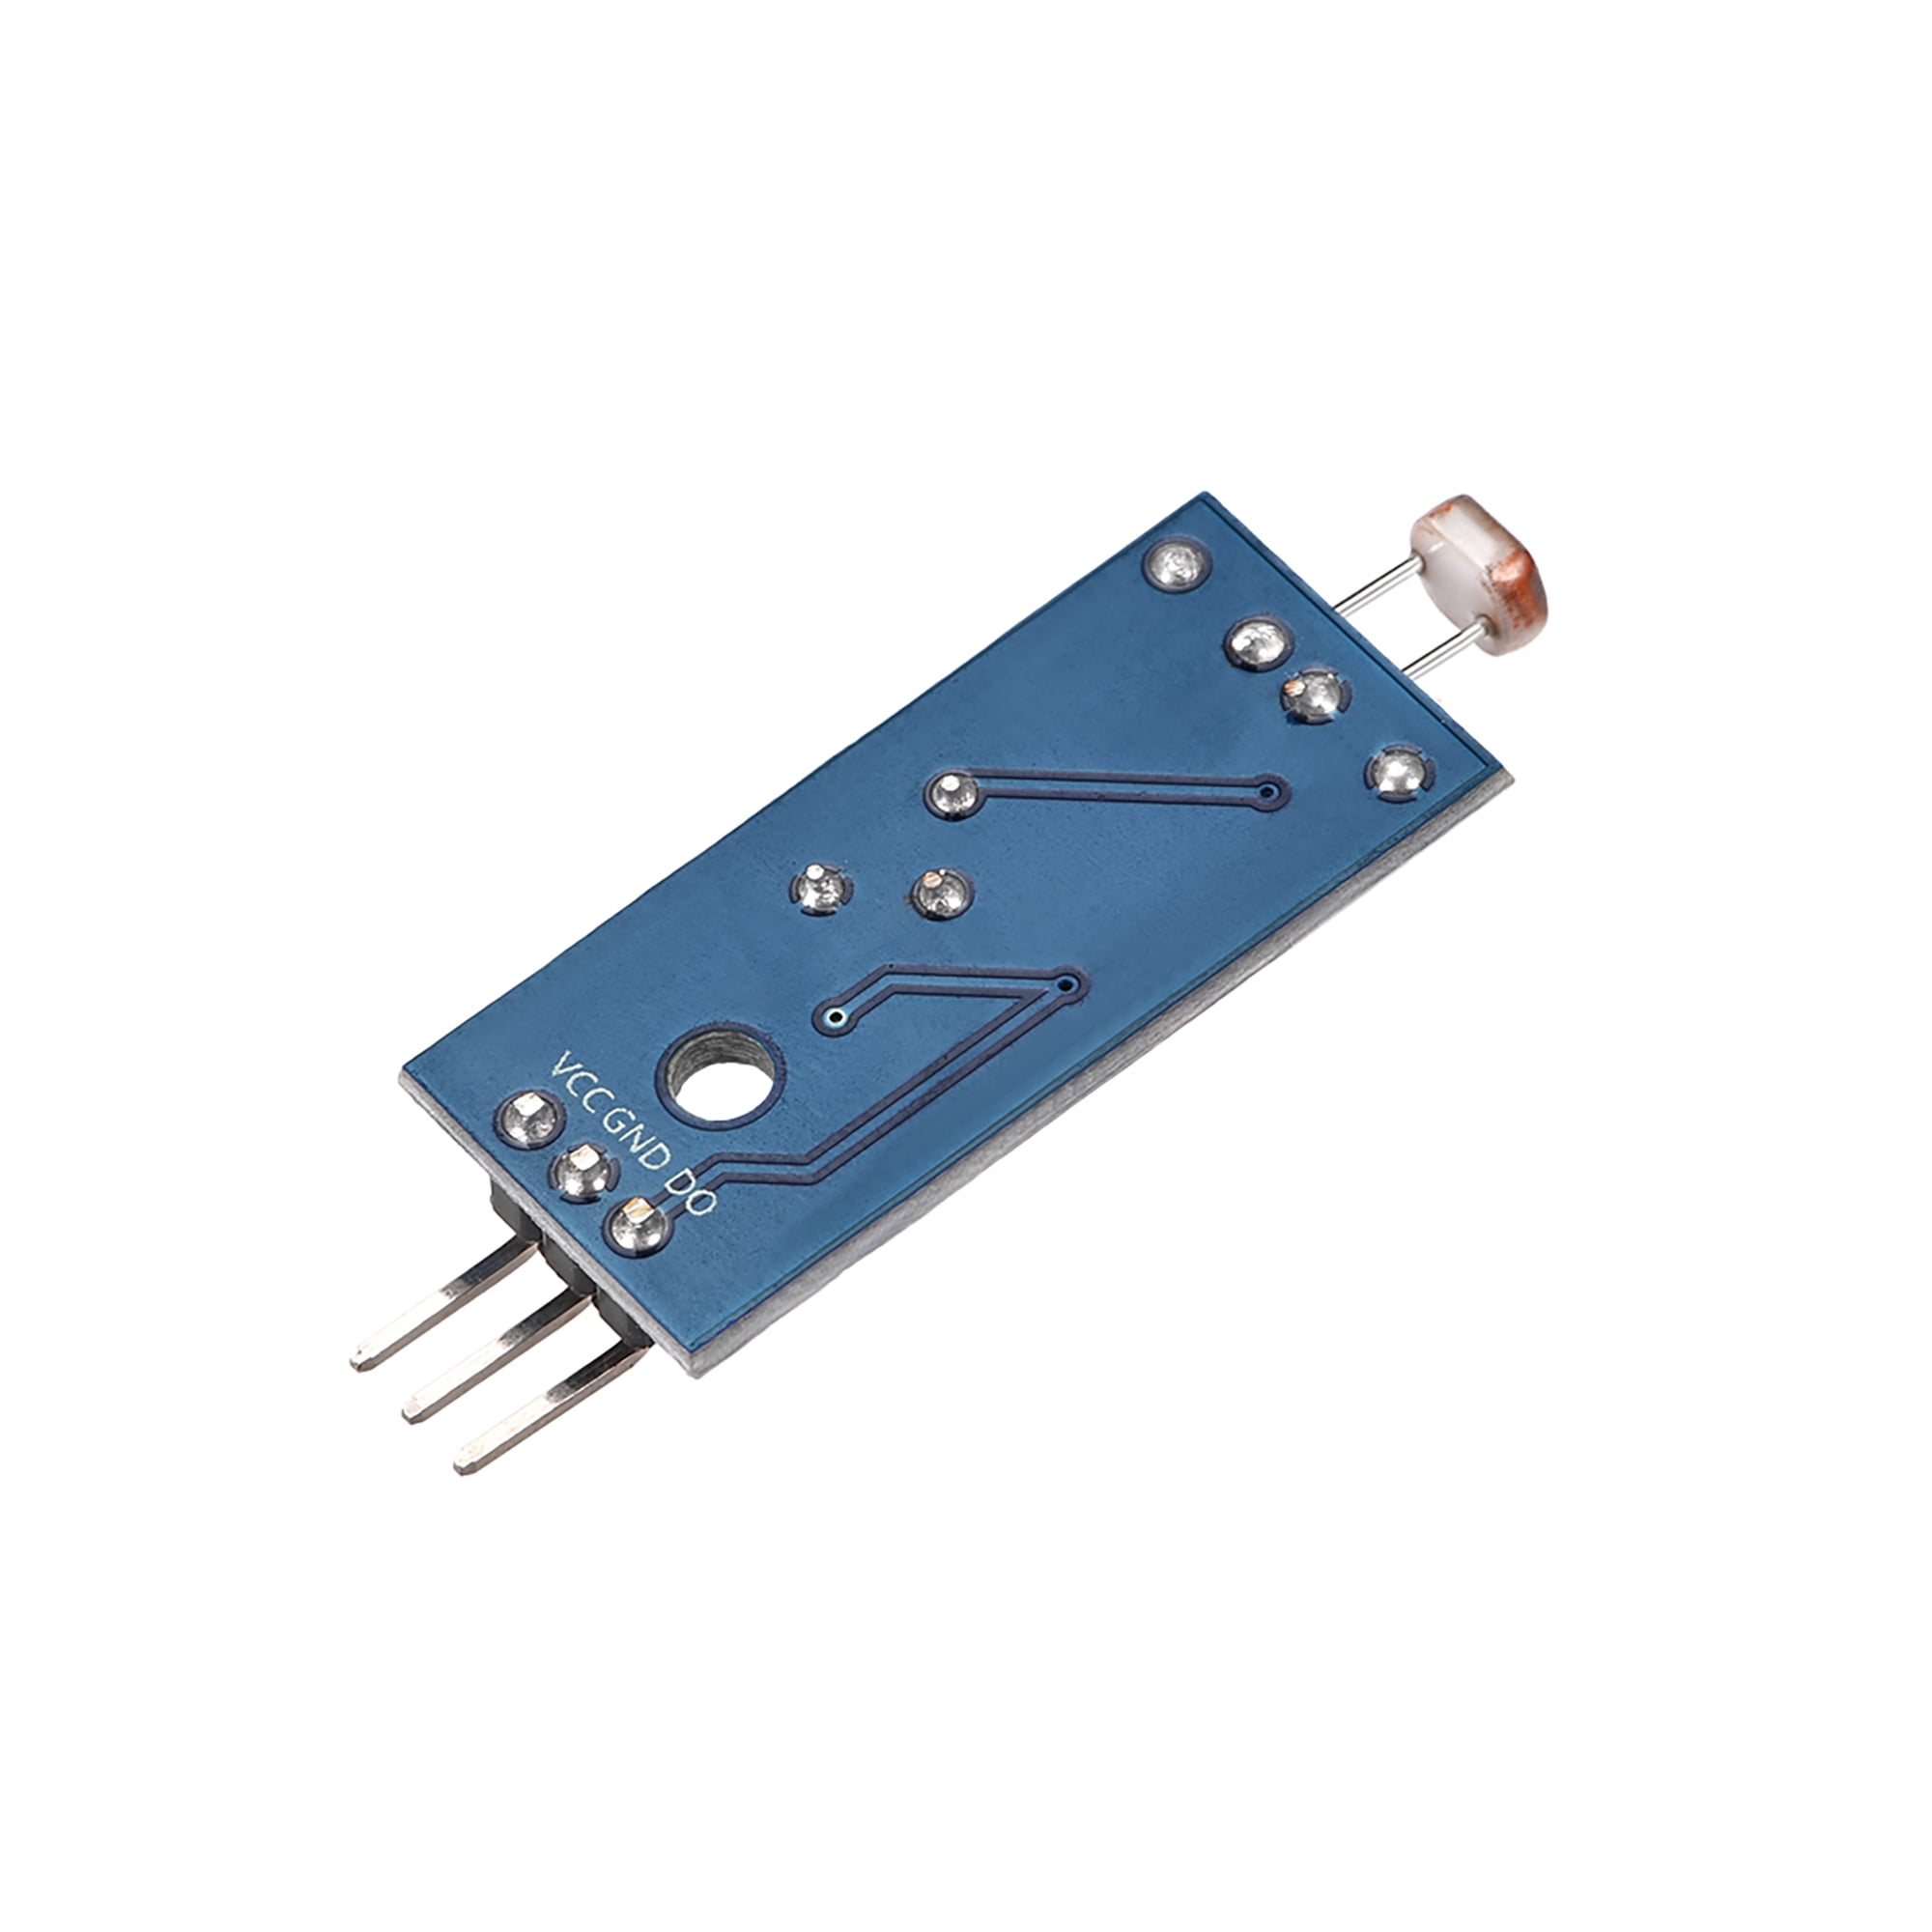 5pcs Light Intensity Photosensitive Sensor Resistor Module For Arduino DC 3.3-5V 